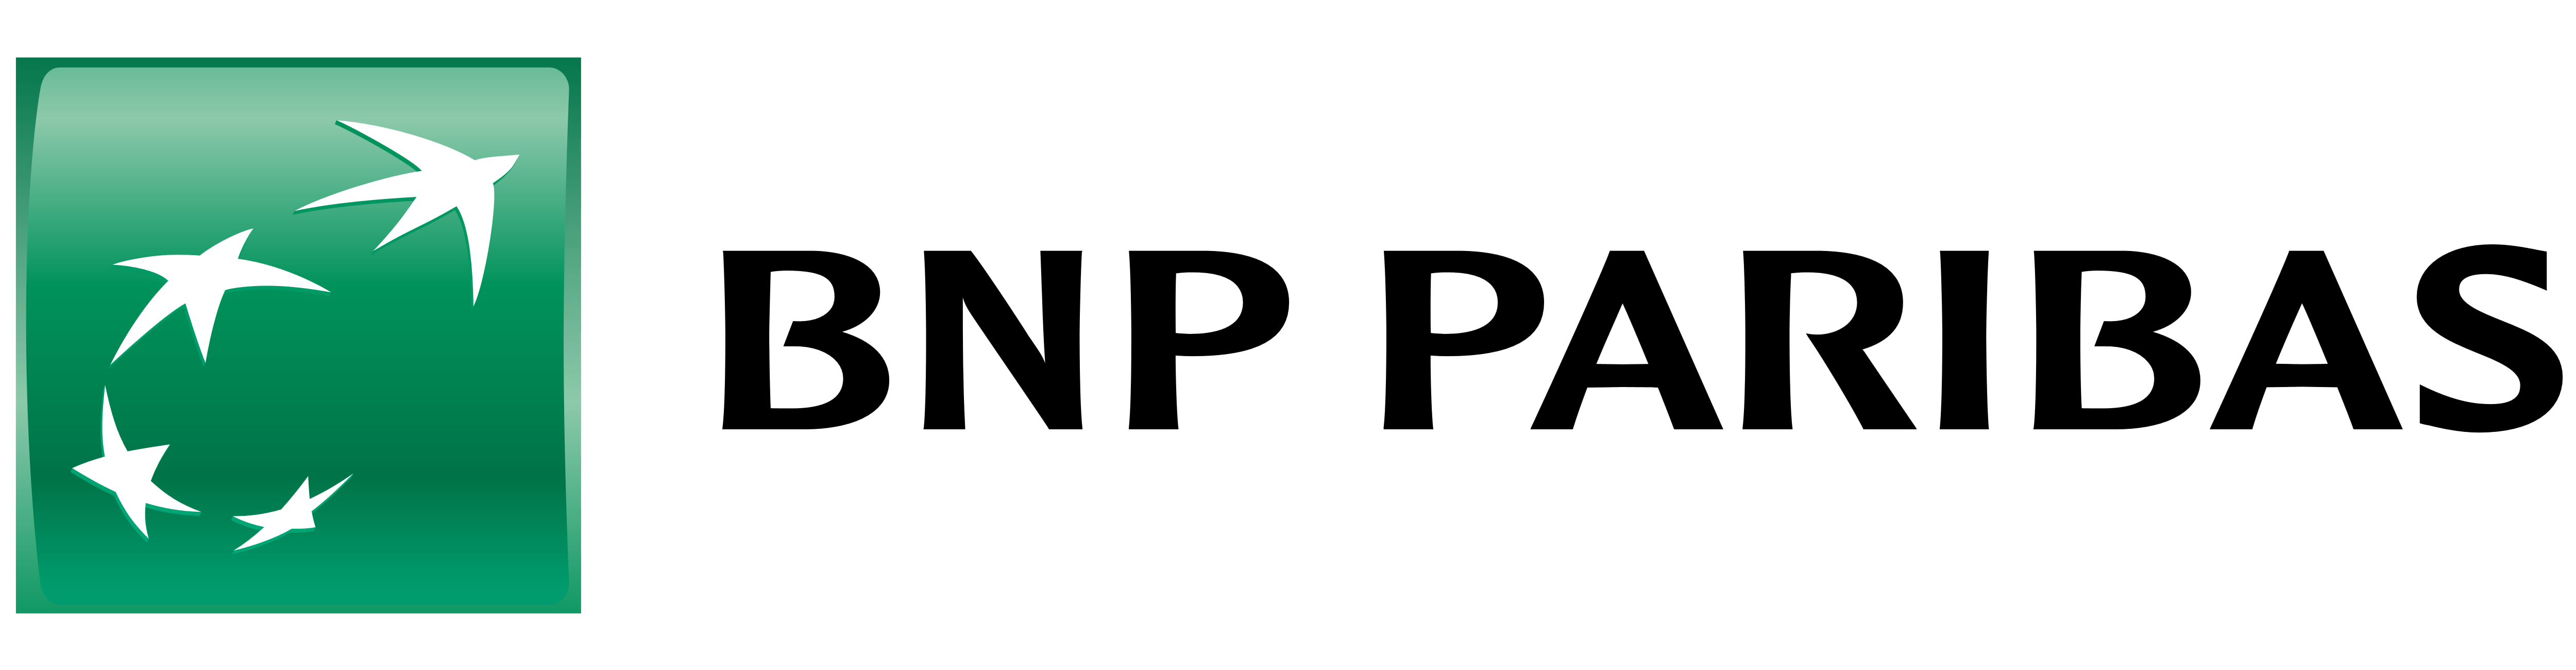 BNPP Logo - BNP Paribas